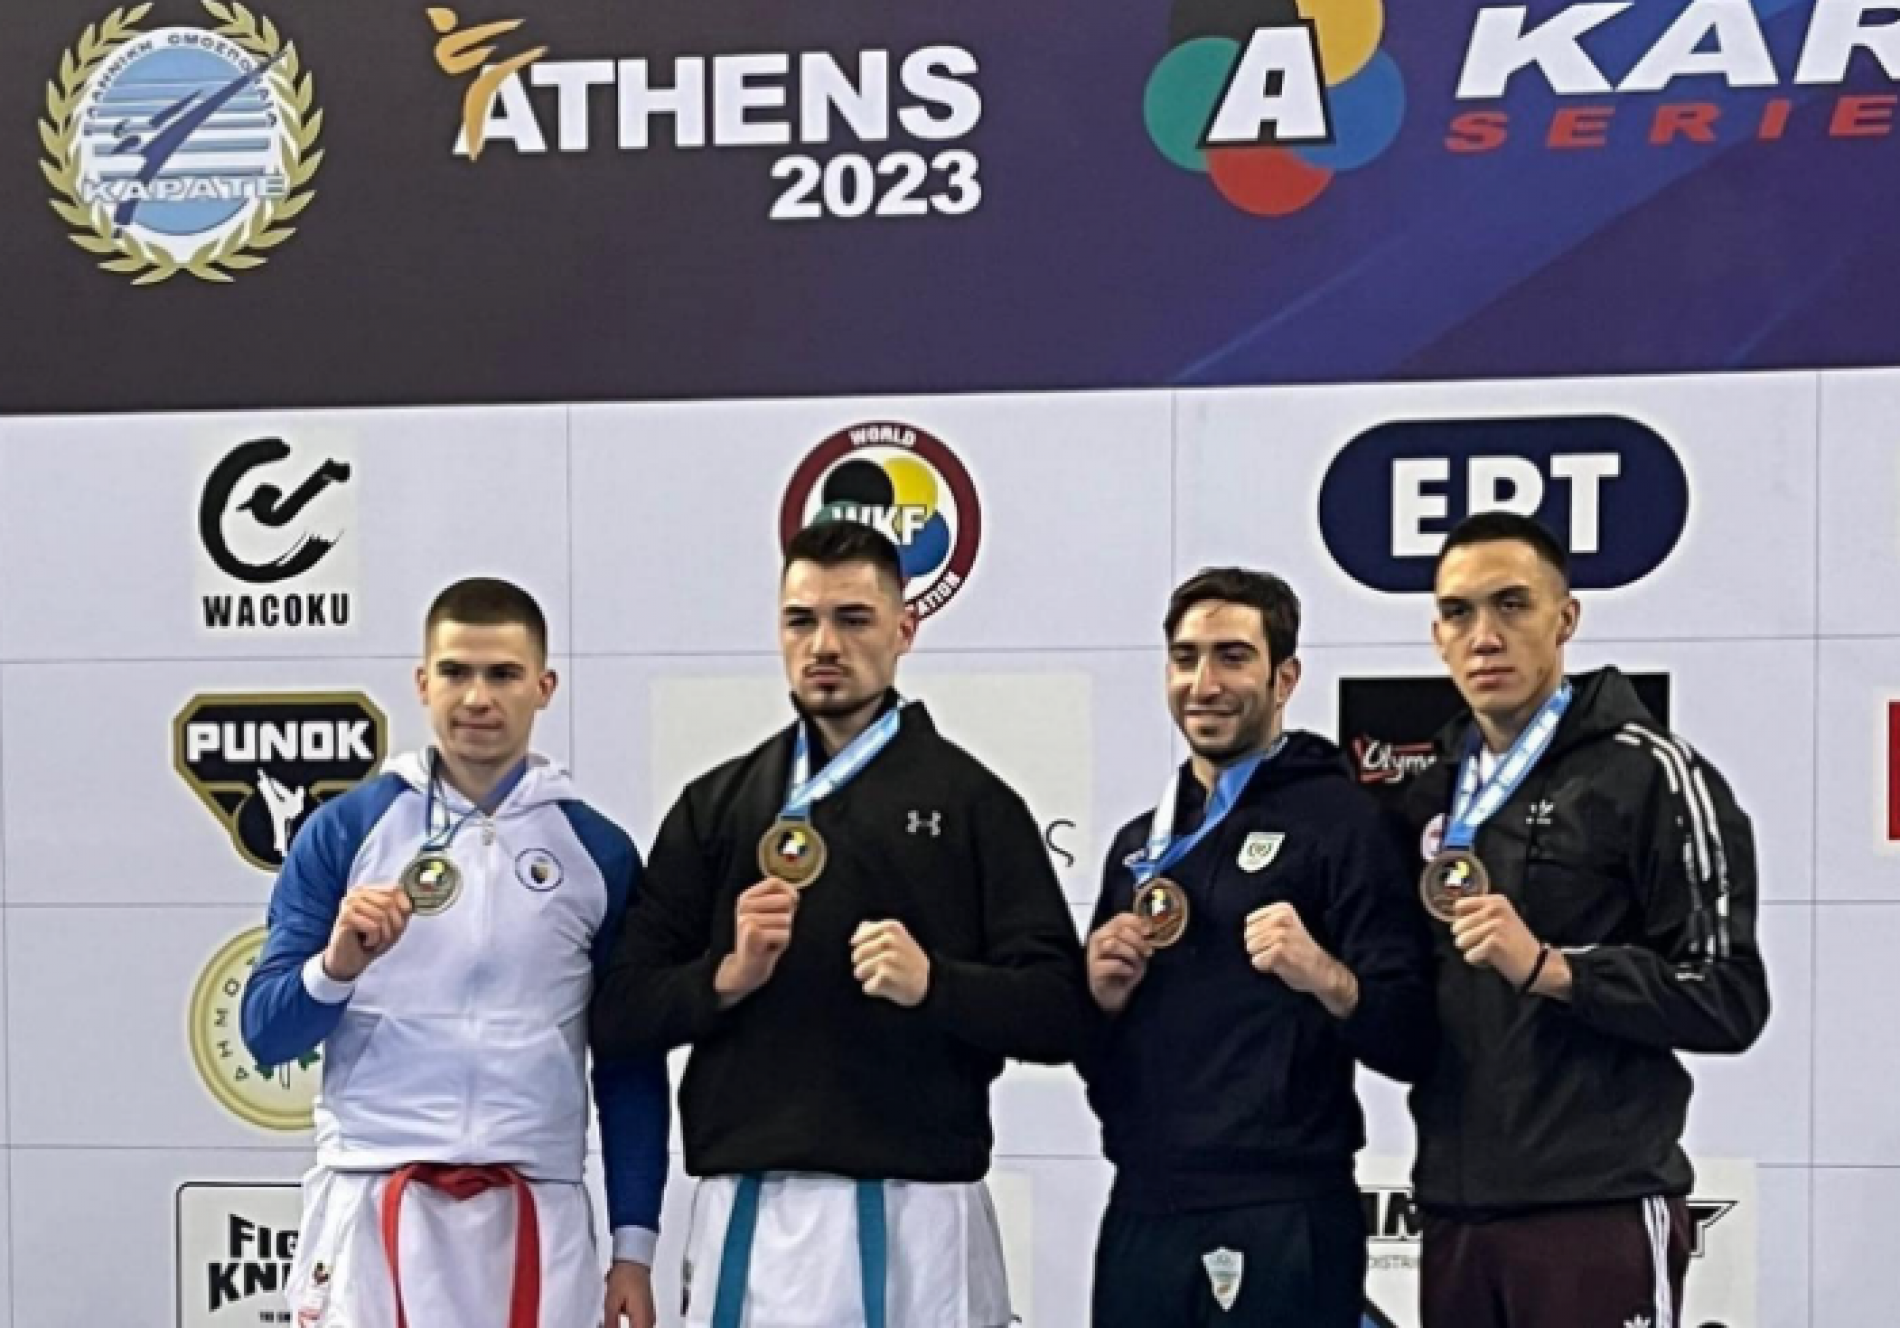 Ponovo veliki uspjeh za bosanske karatiste – Bostandžić prvi, Krešić drugi na turniru u Atini